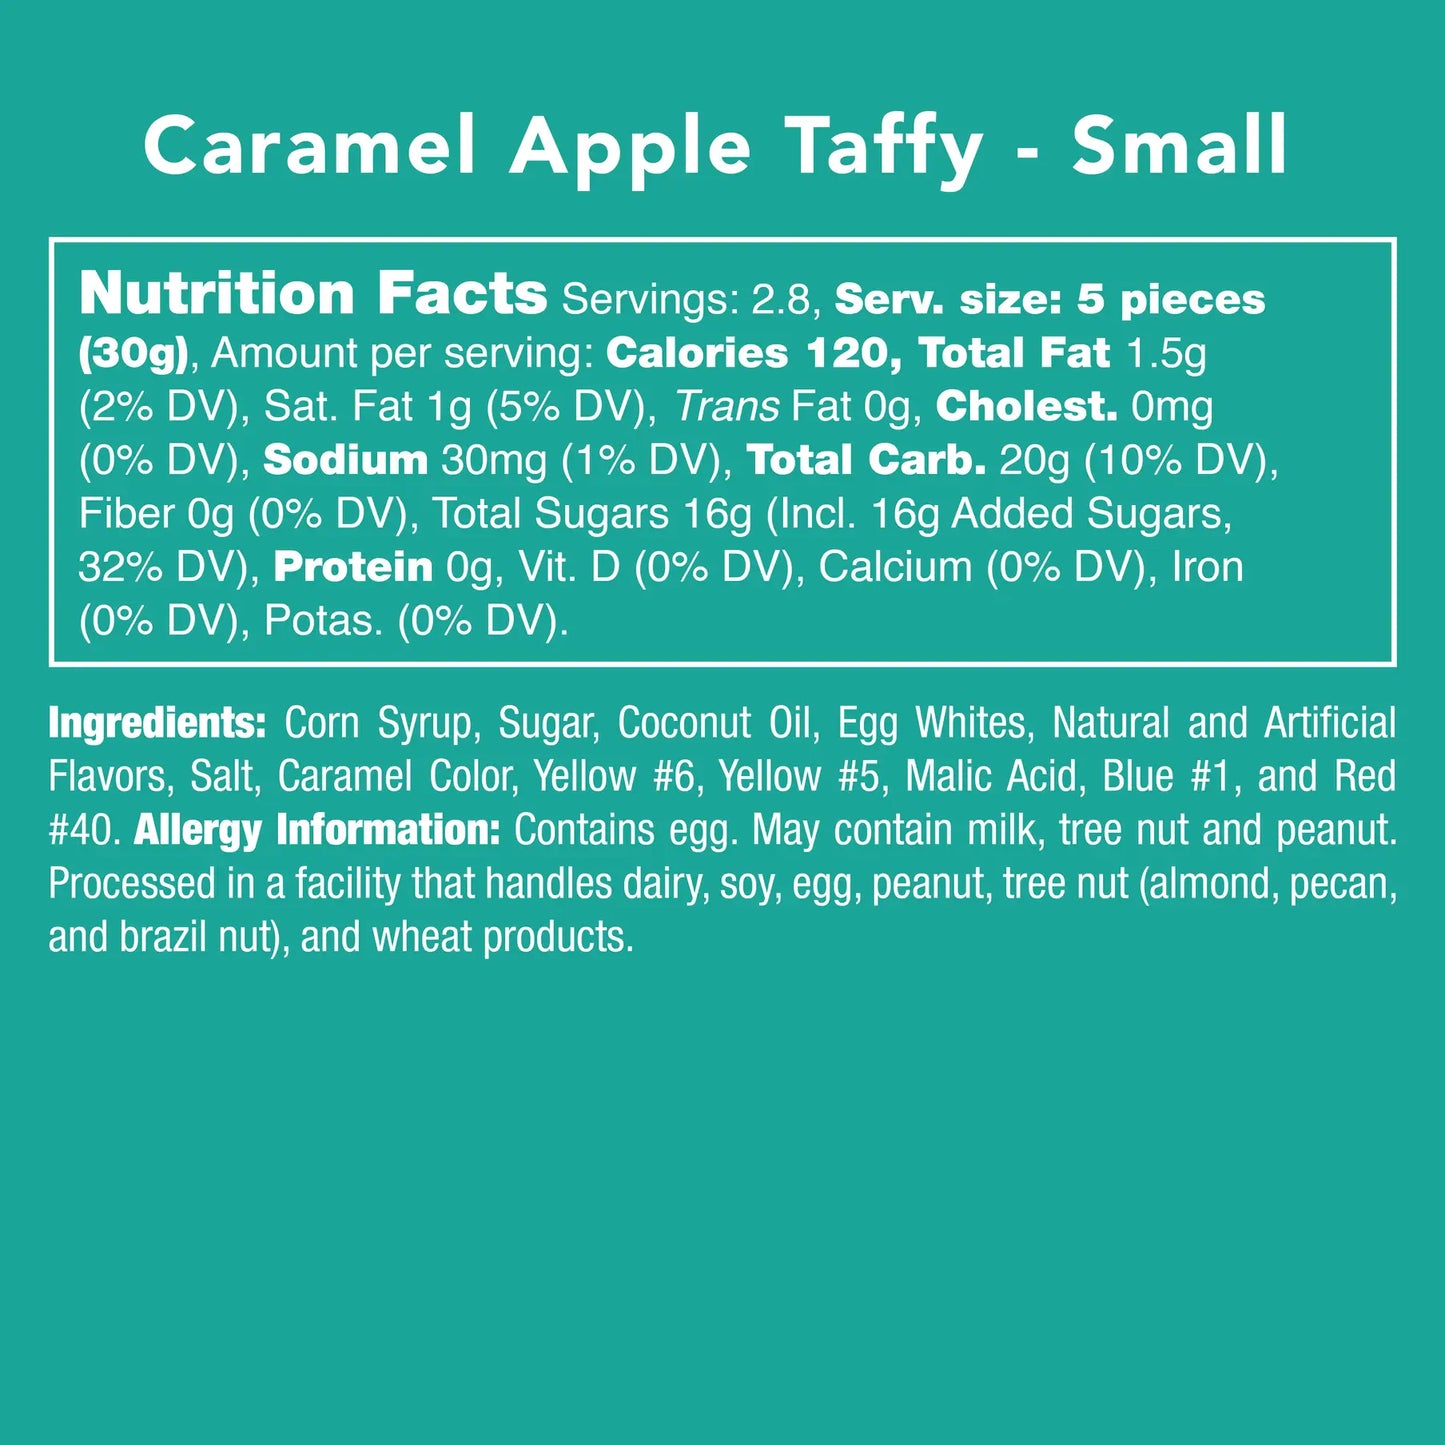 Caramel Apple Taffy Candy